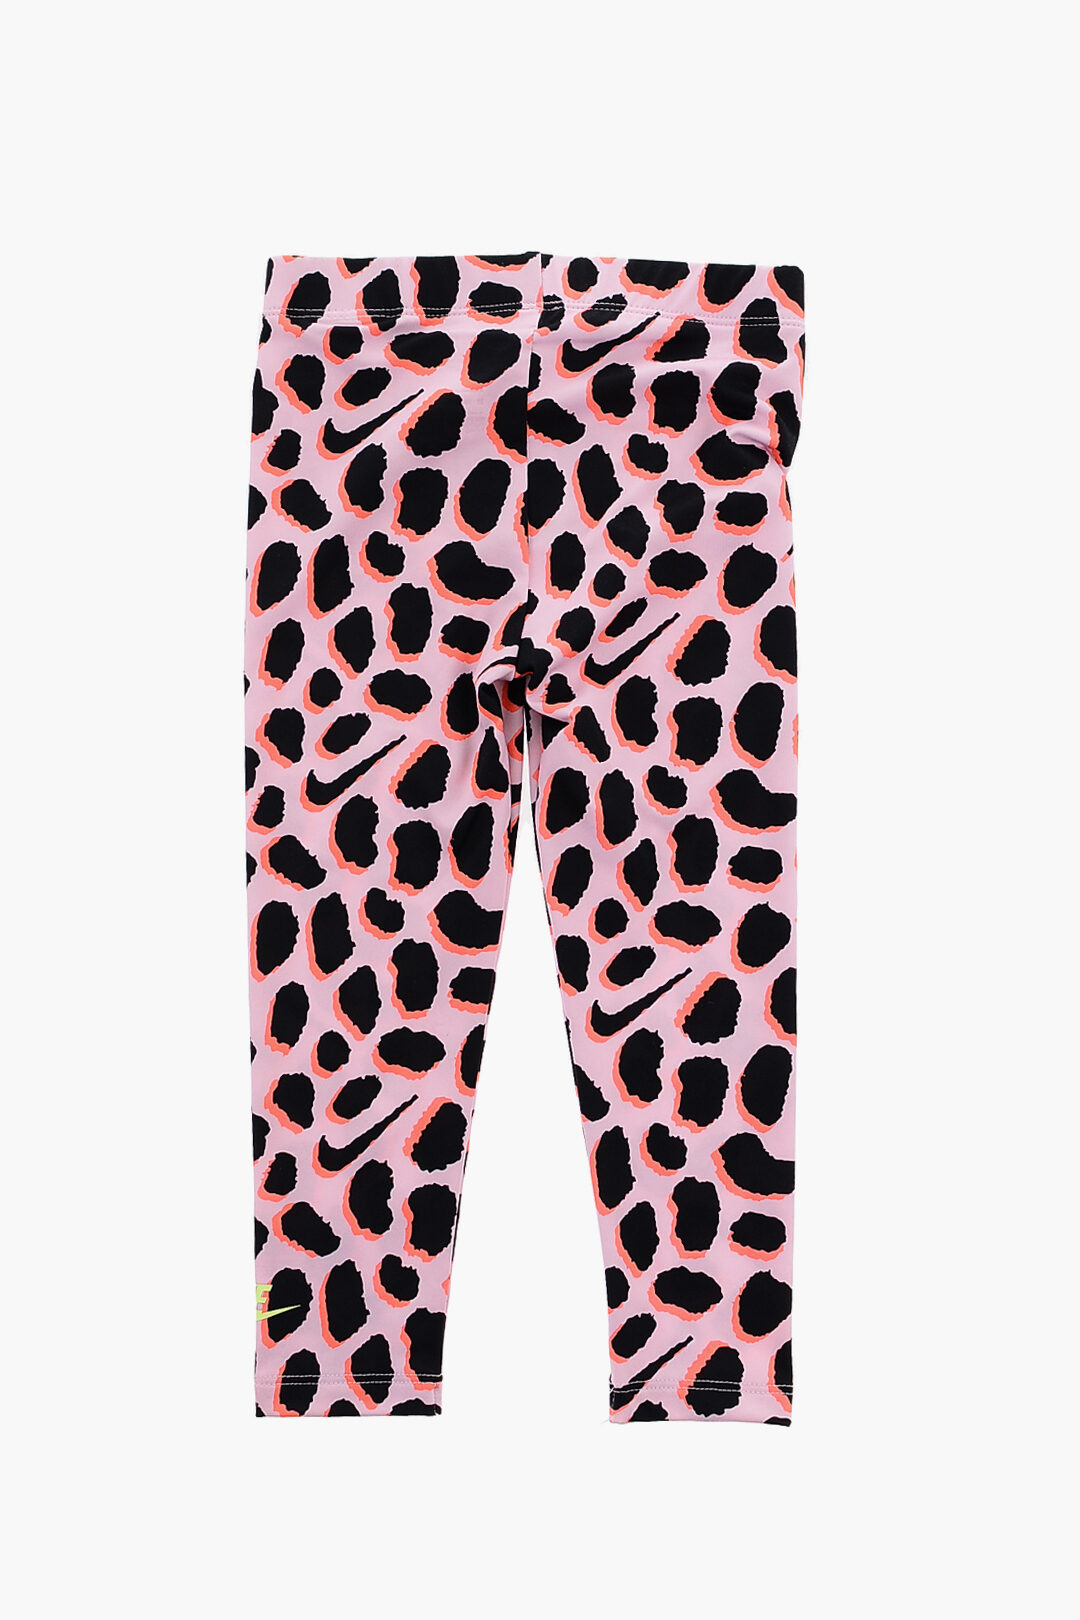 Nike KIDS Animal Pattered Leggings and T-shirt Set girls - Glamood Outlet